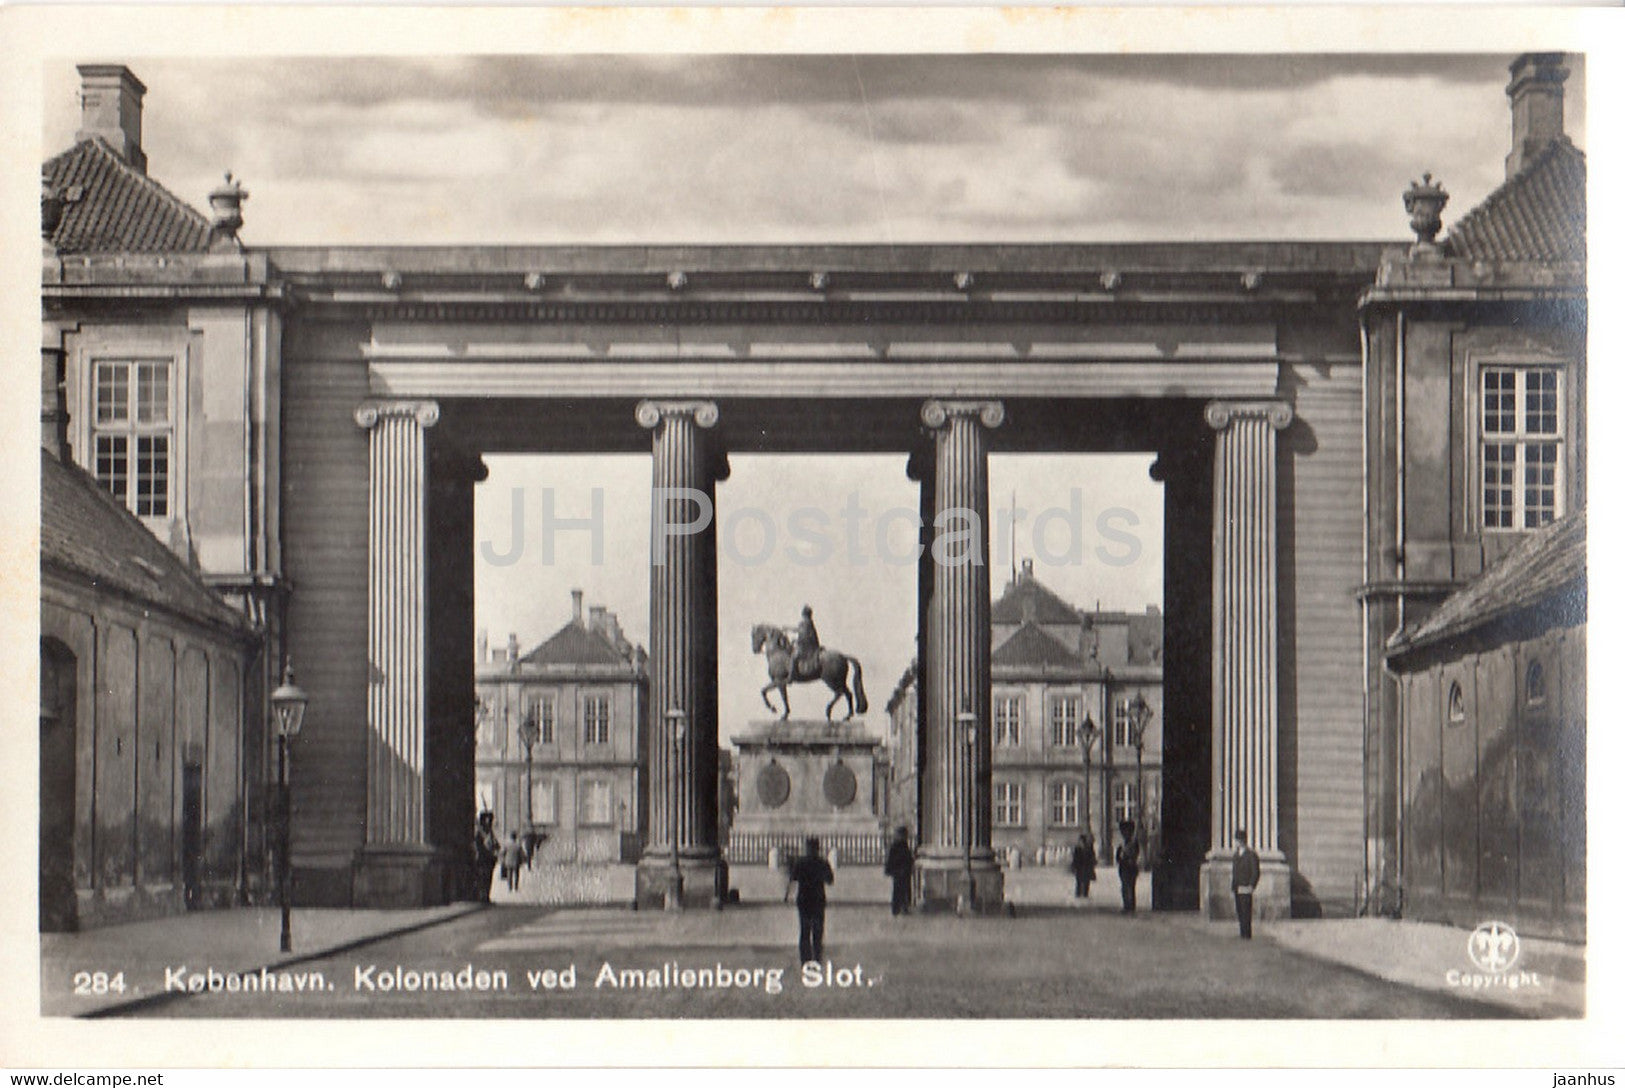 Copenhagen - Kobenhavn - Kolonaden ved Amalienborg Slot - Colonnade - 284 - old postcard - Denmark - unused - JH Postcards